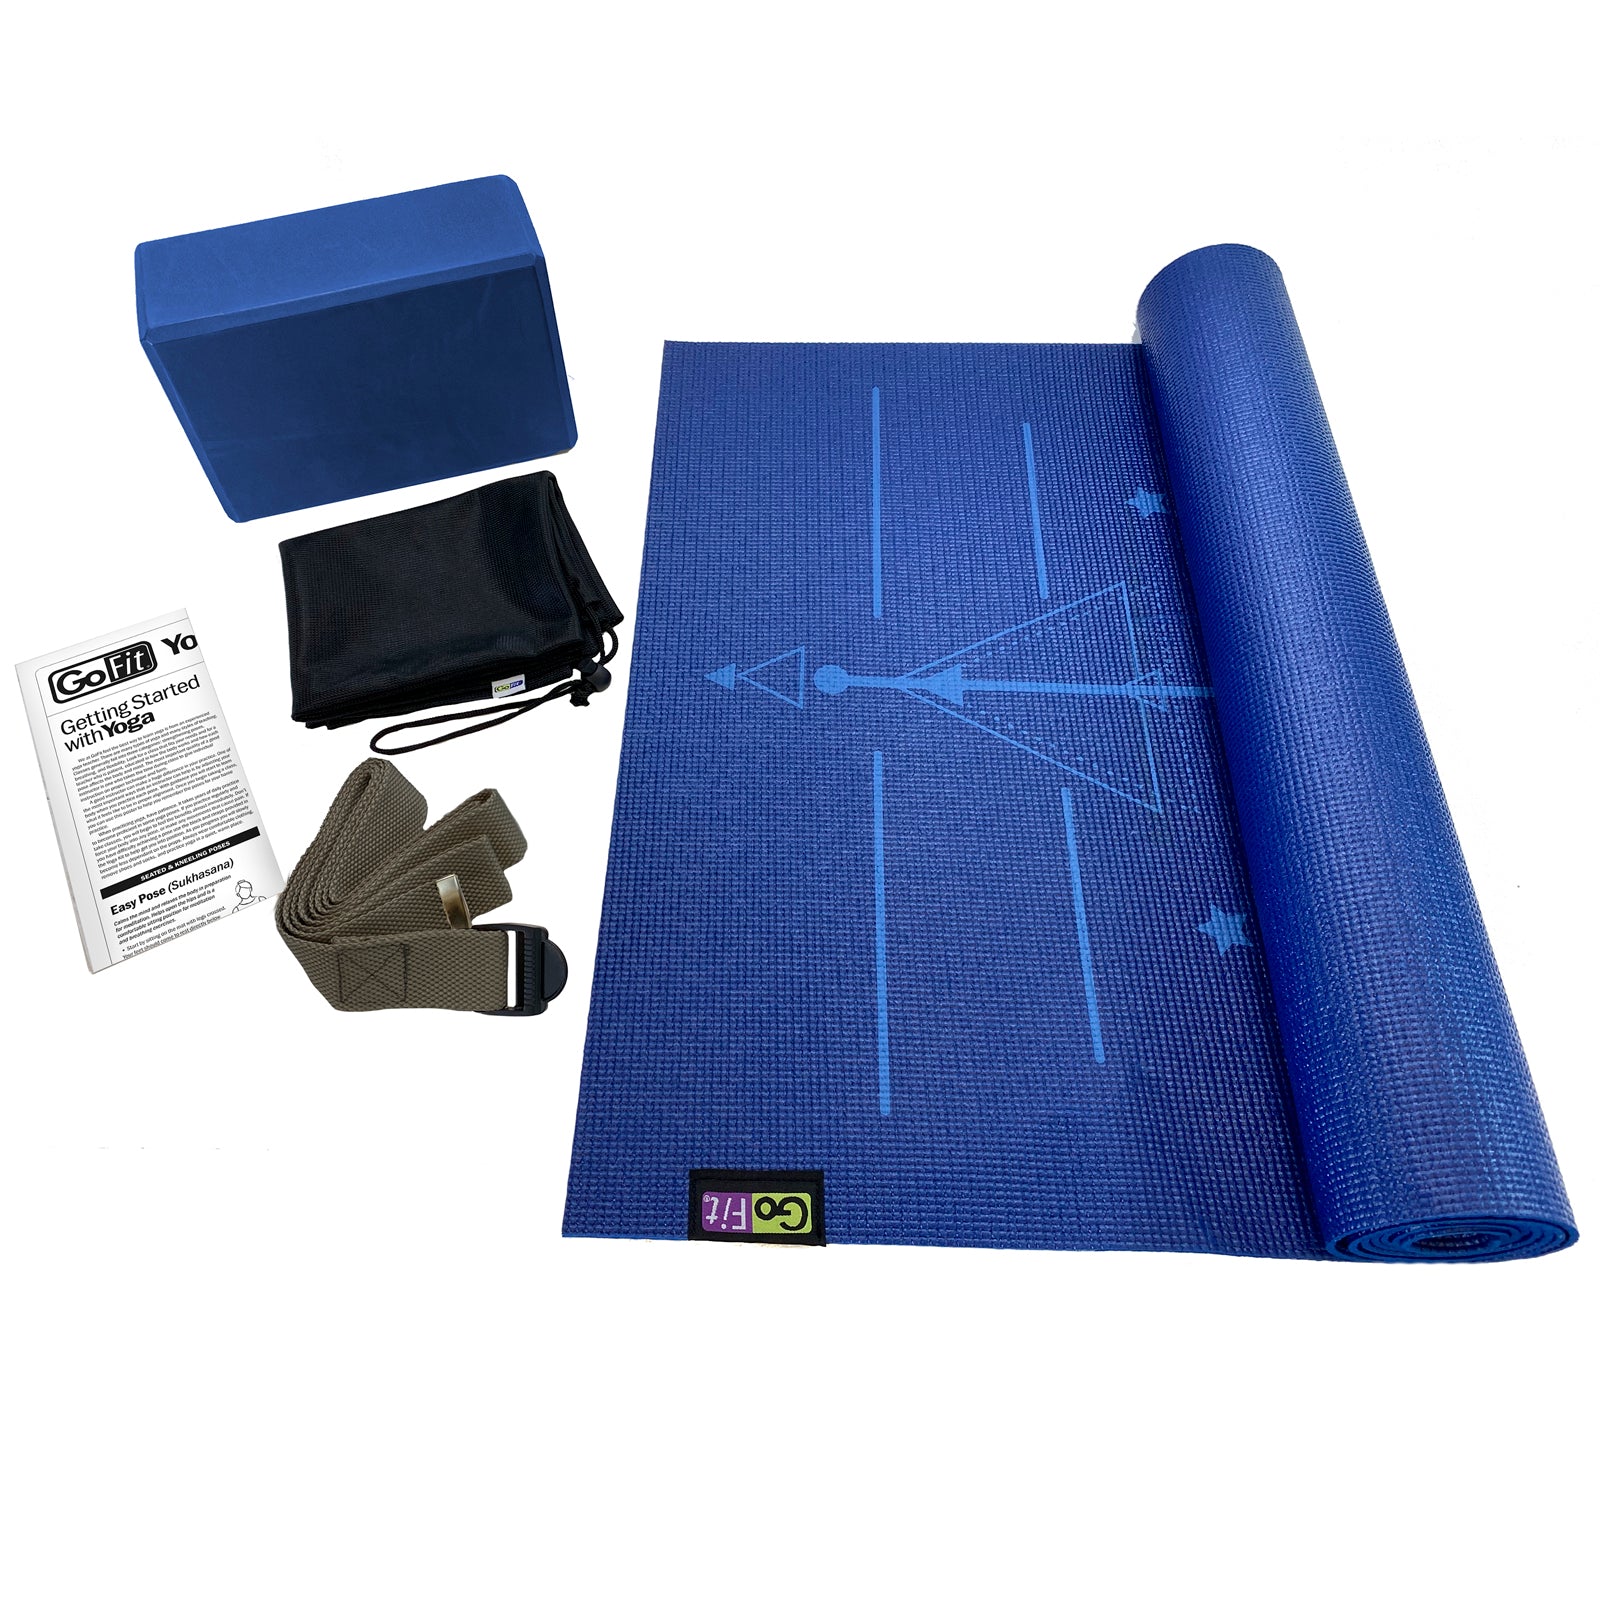 Theyogawarehouse Product Detail: Standard Yoga Kit, Personal Yoga Sets,  YK135